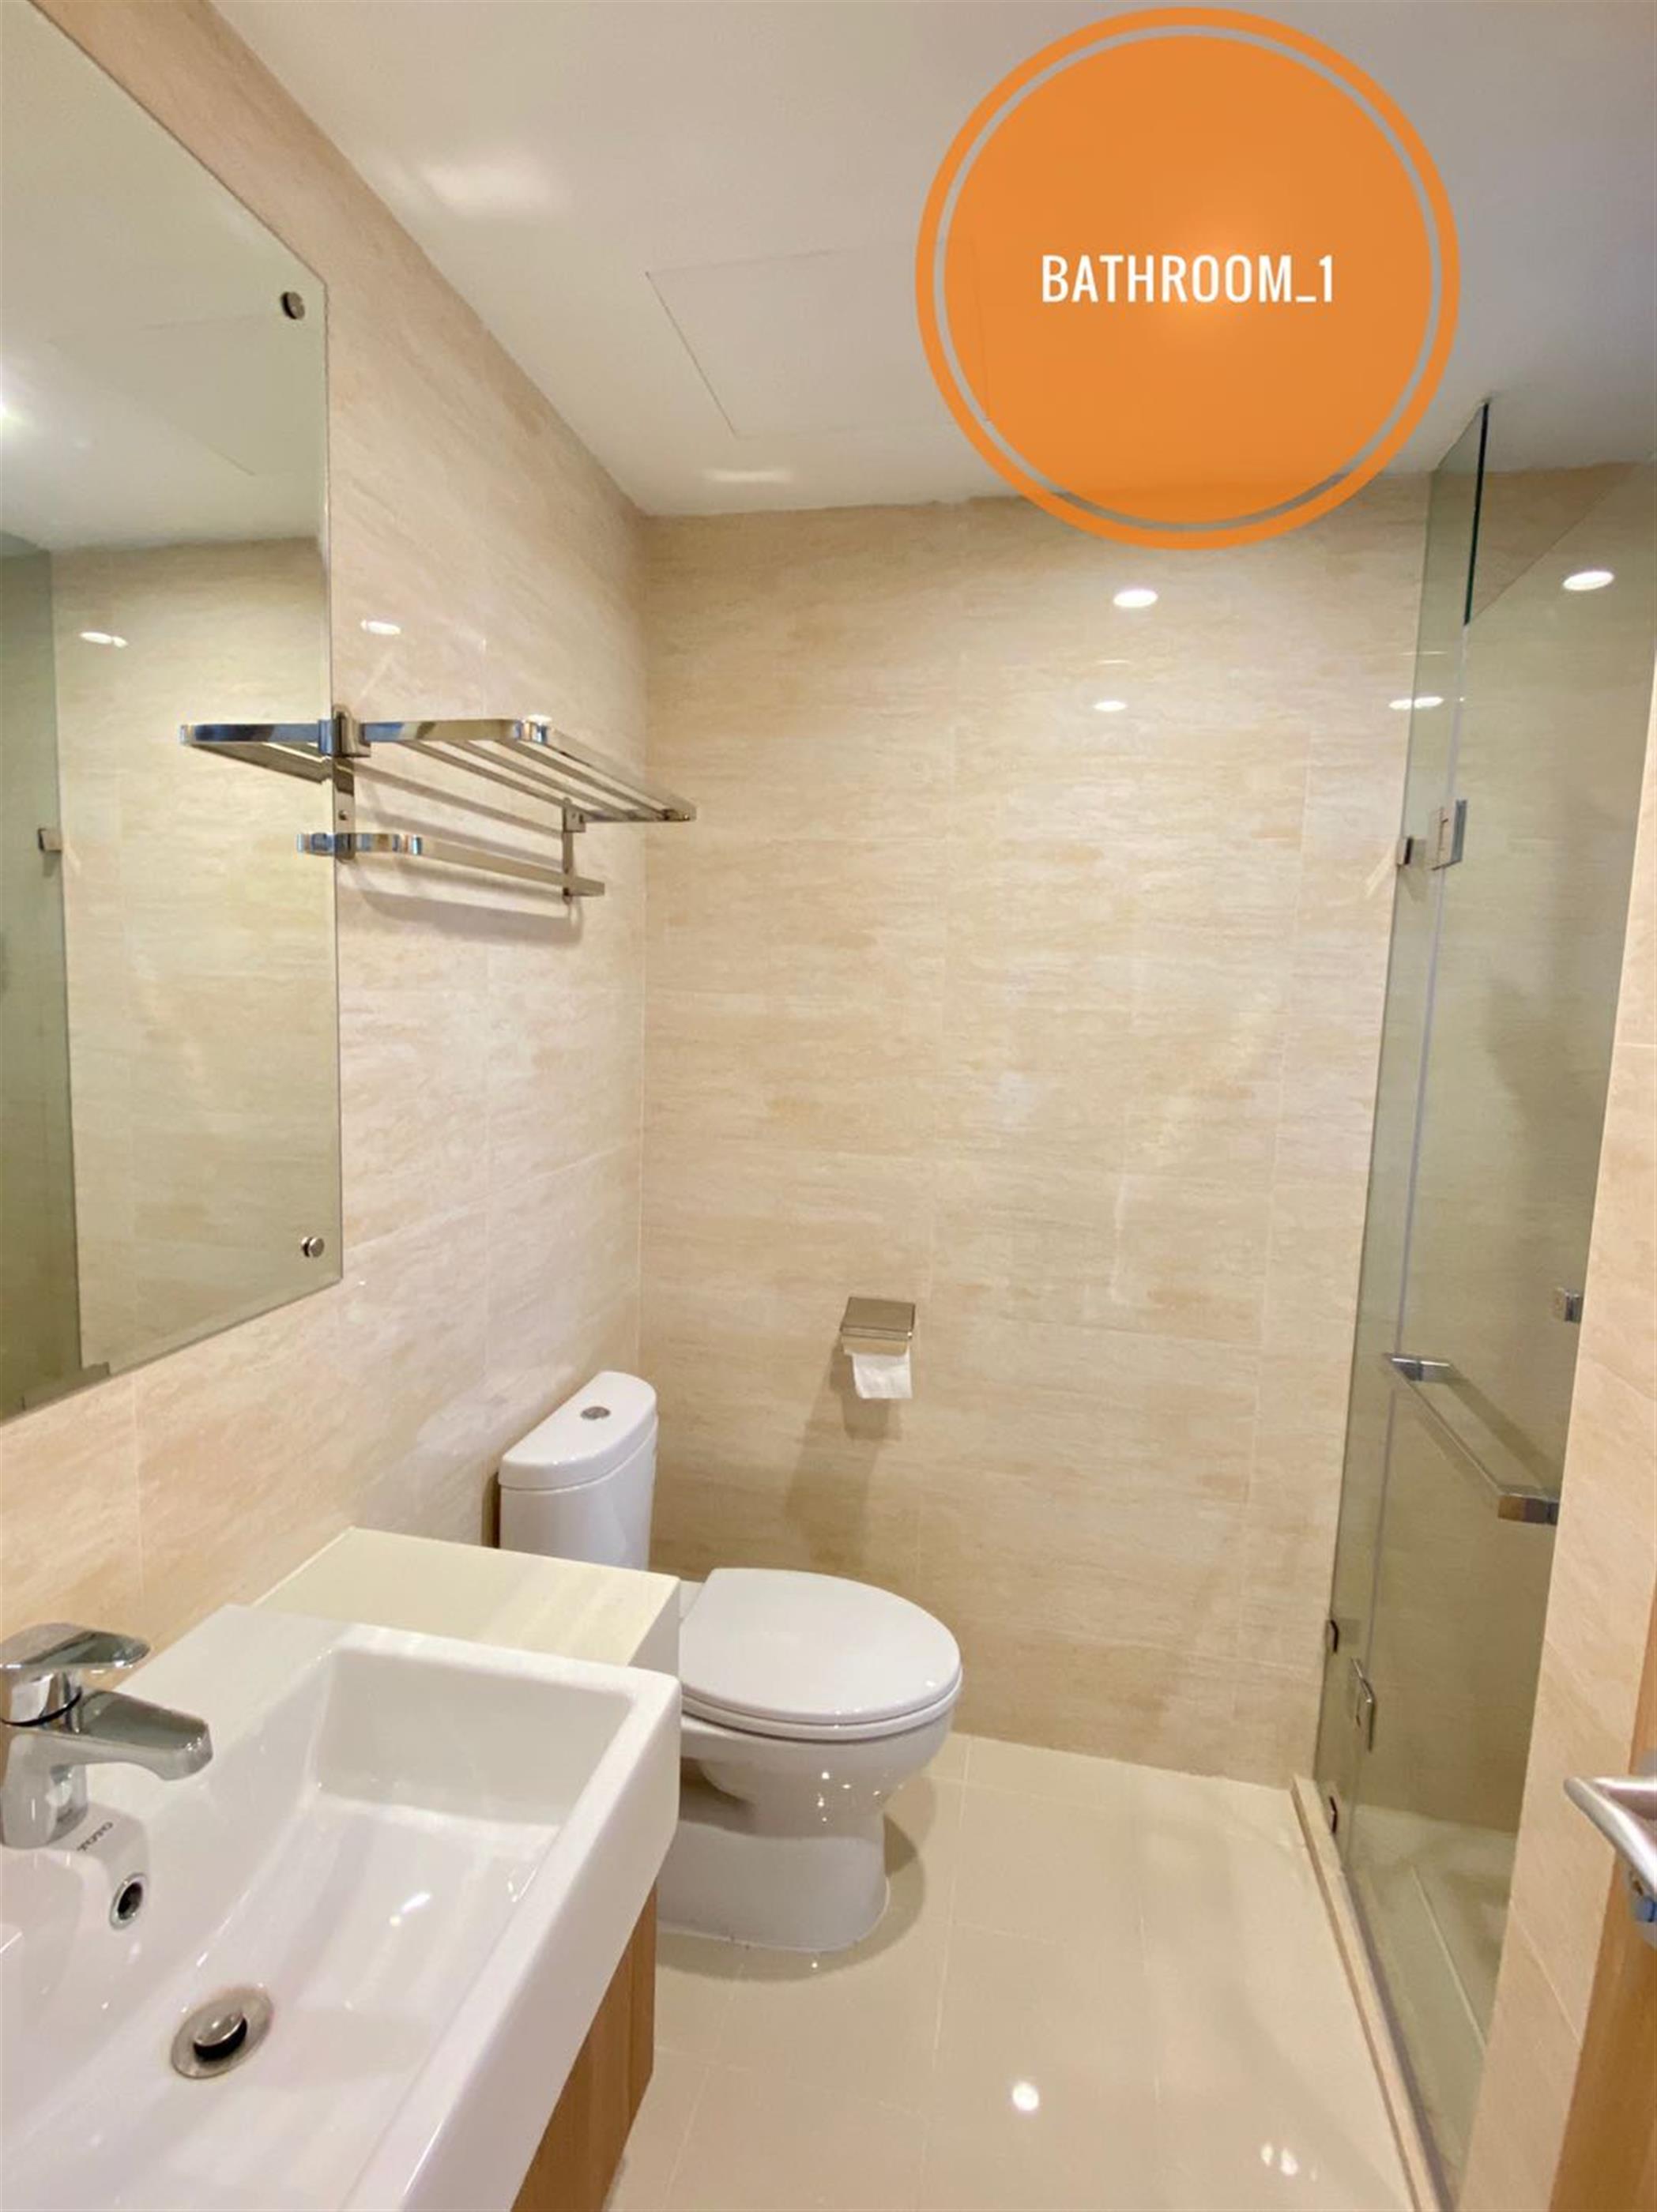 Bathroom Brand New Sunny Apartment nr LN 10 for Rent in Hongkou Shanghai